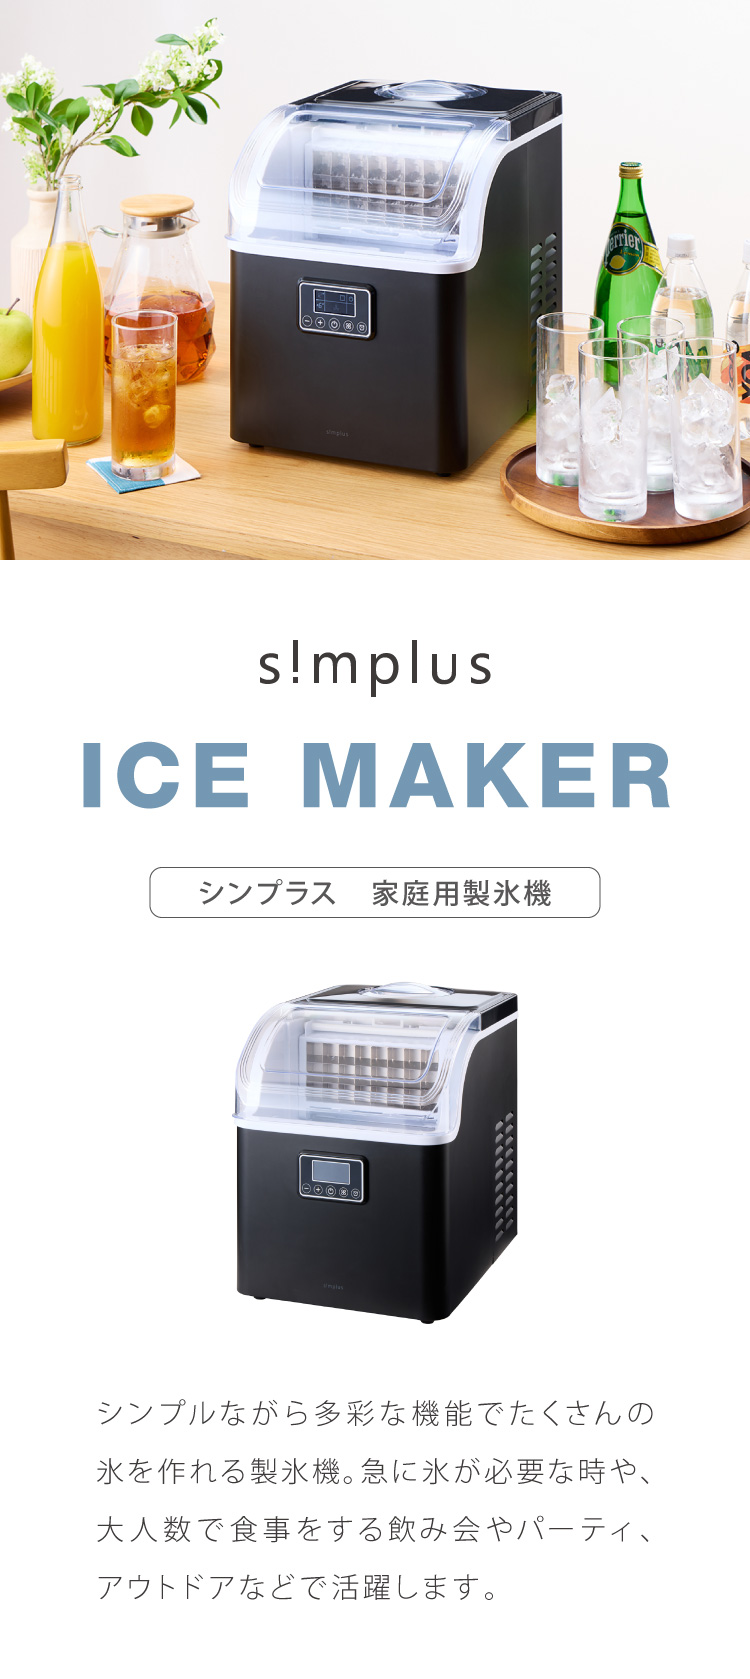 simplus シンプラス 製氷機 SP-CE02 四角い氷 キューブアイス 家庭用 自動洗浄機能付き タイマー機能 簡単操作 パネル式 氷  自動製氷機 アイスメーカー